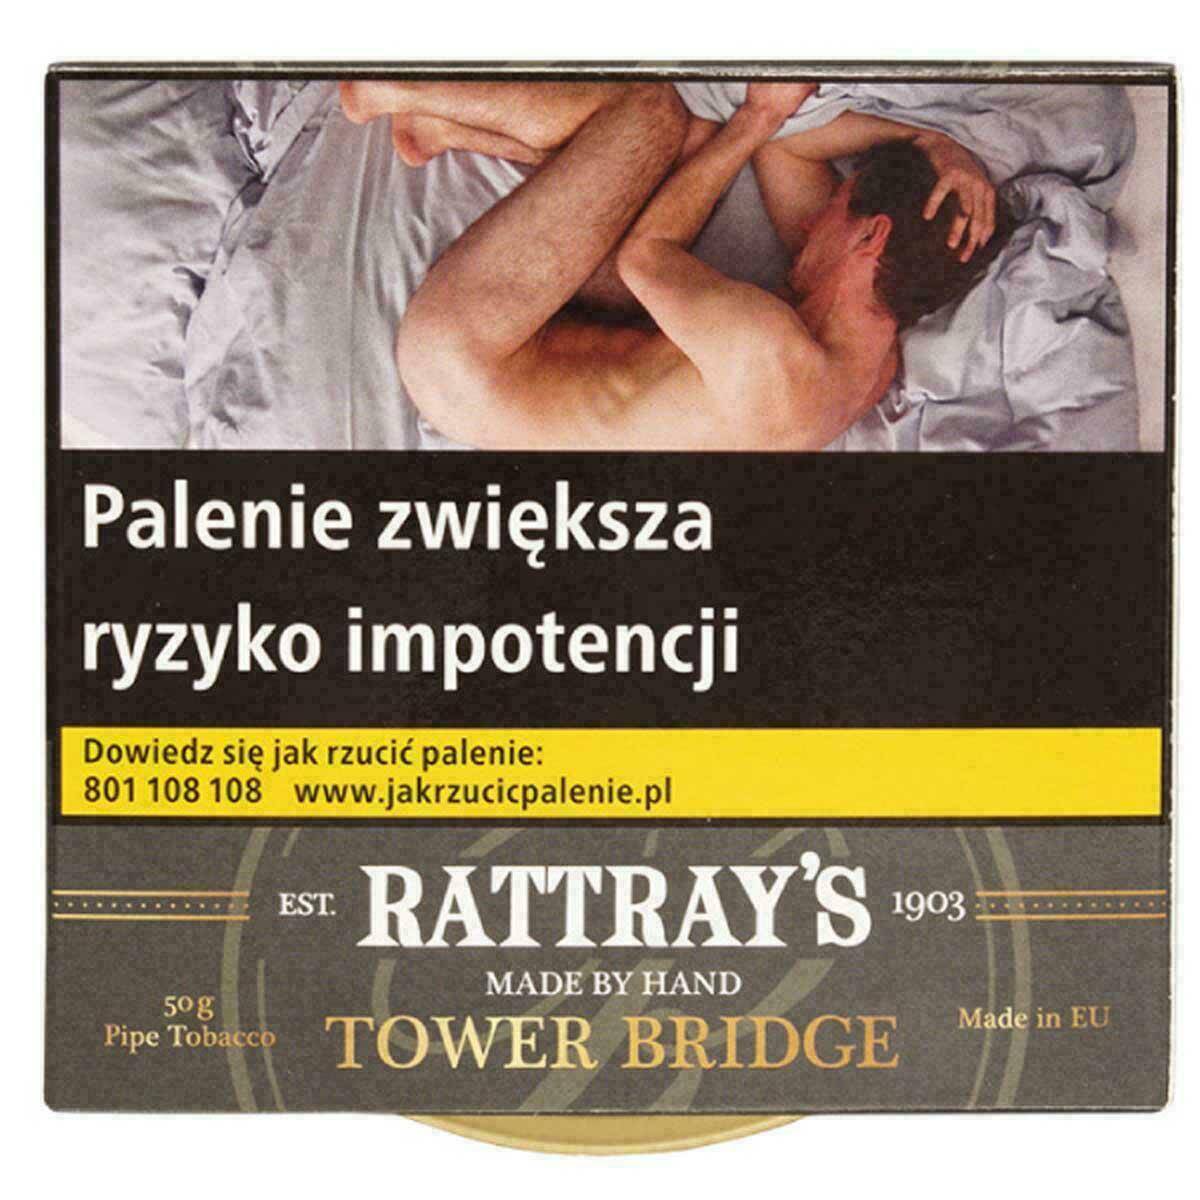 Tobacco Rattray Tower Bridge 50g (79,90)